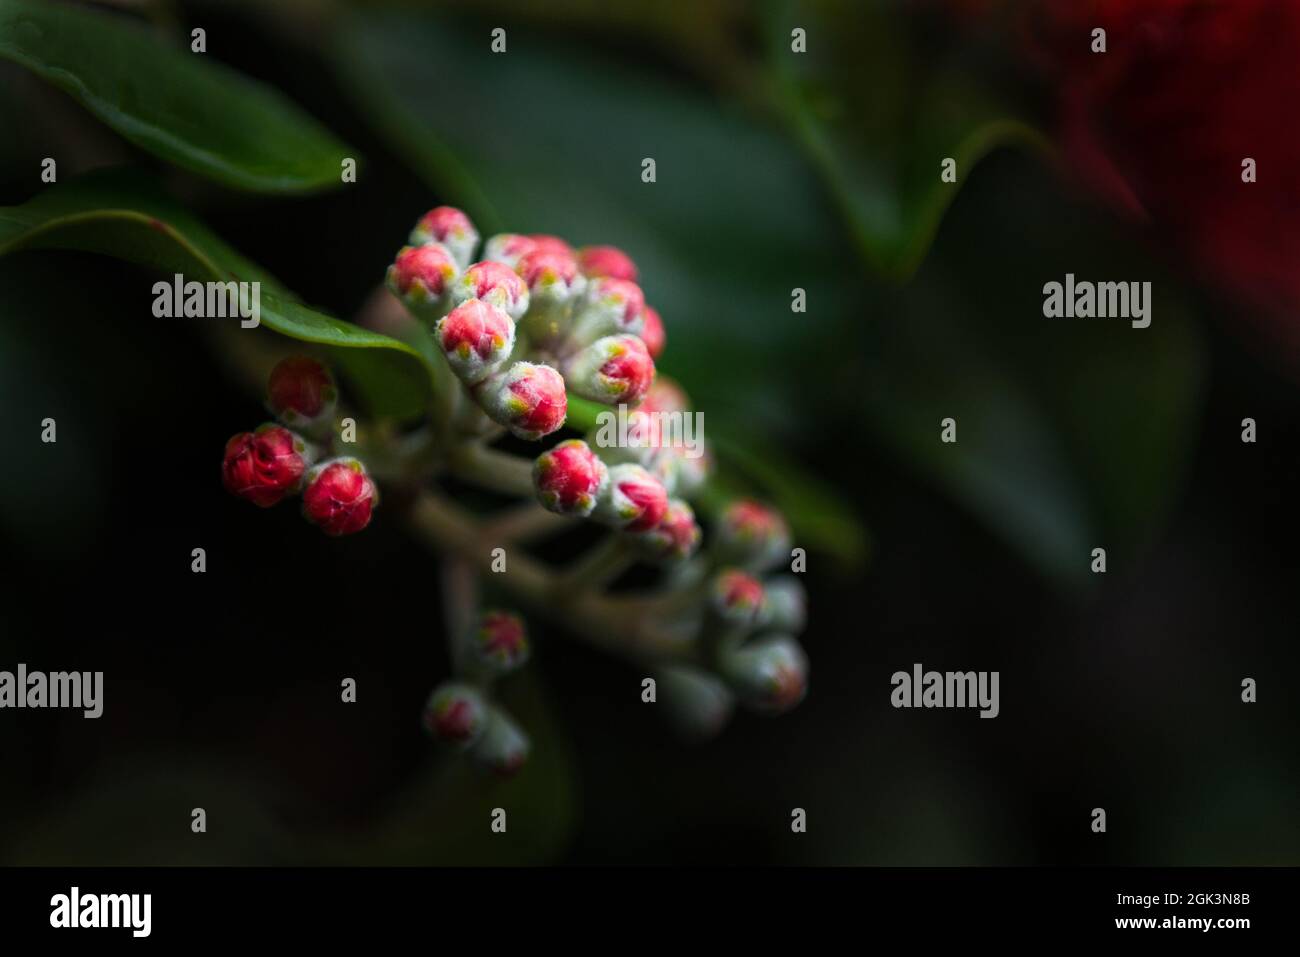 Red Pohutukawa flower buds opening. New Zealand Christmas tree. Stock Photo